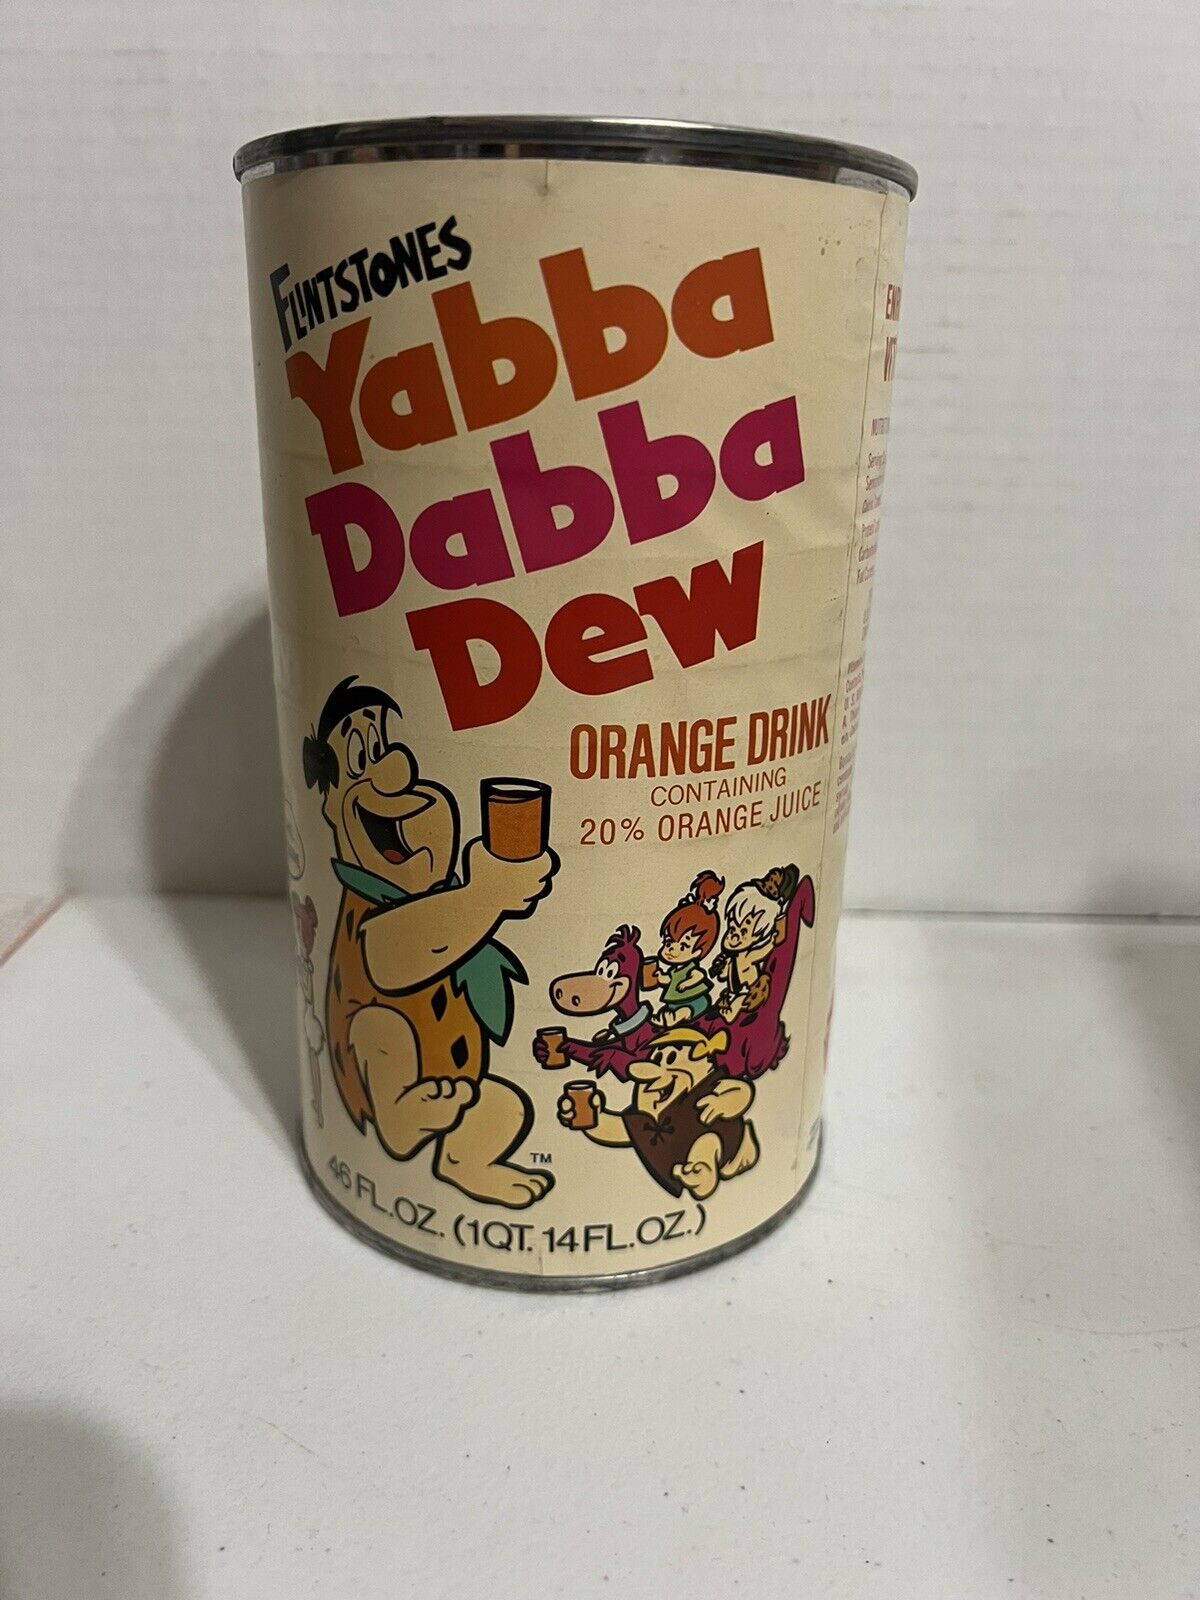 1974 Flintstones Yabba Dabba Dew Orange Drink Can - RARE